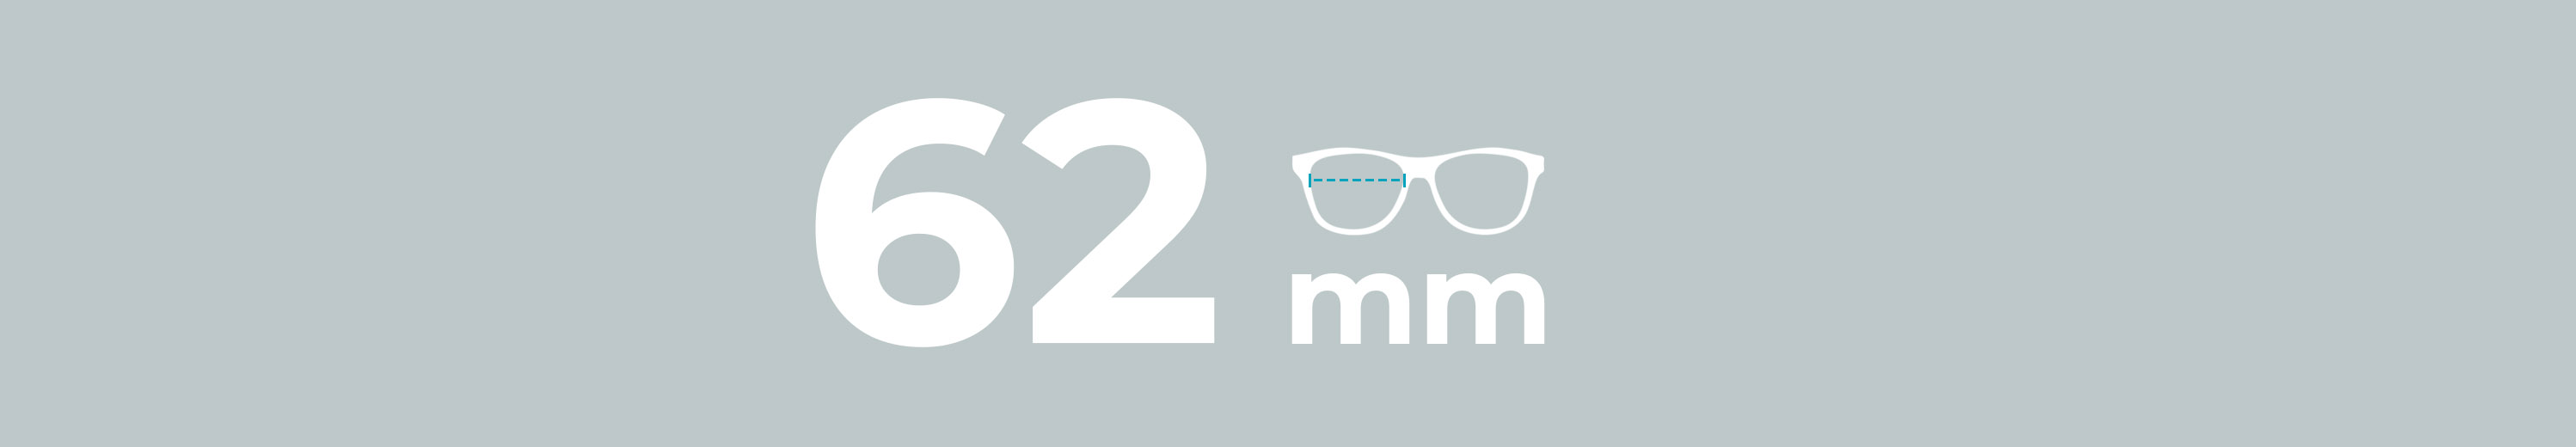 Lens Size: 62mm Glasses